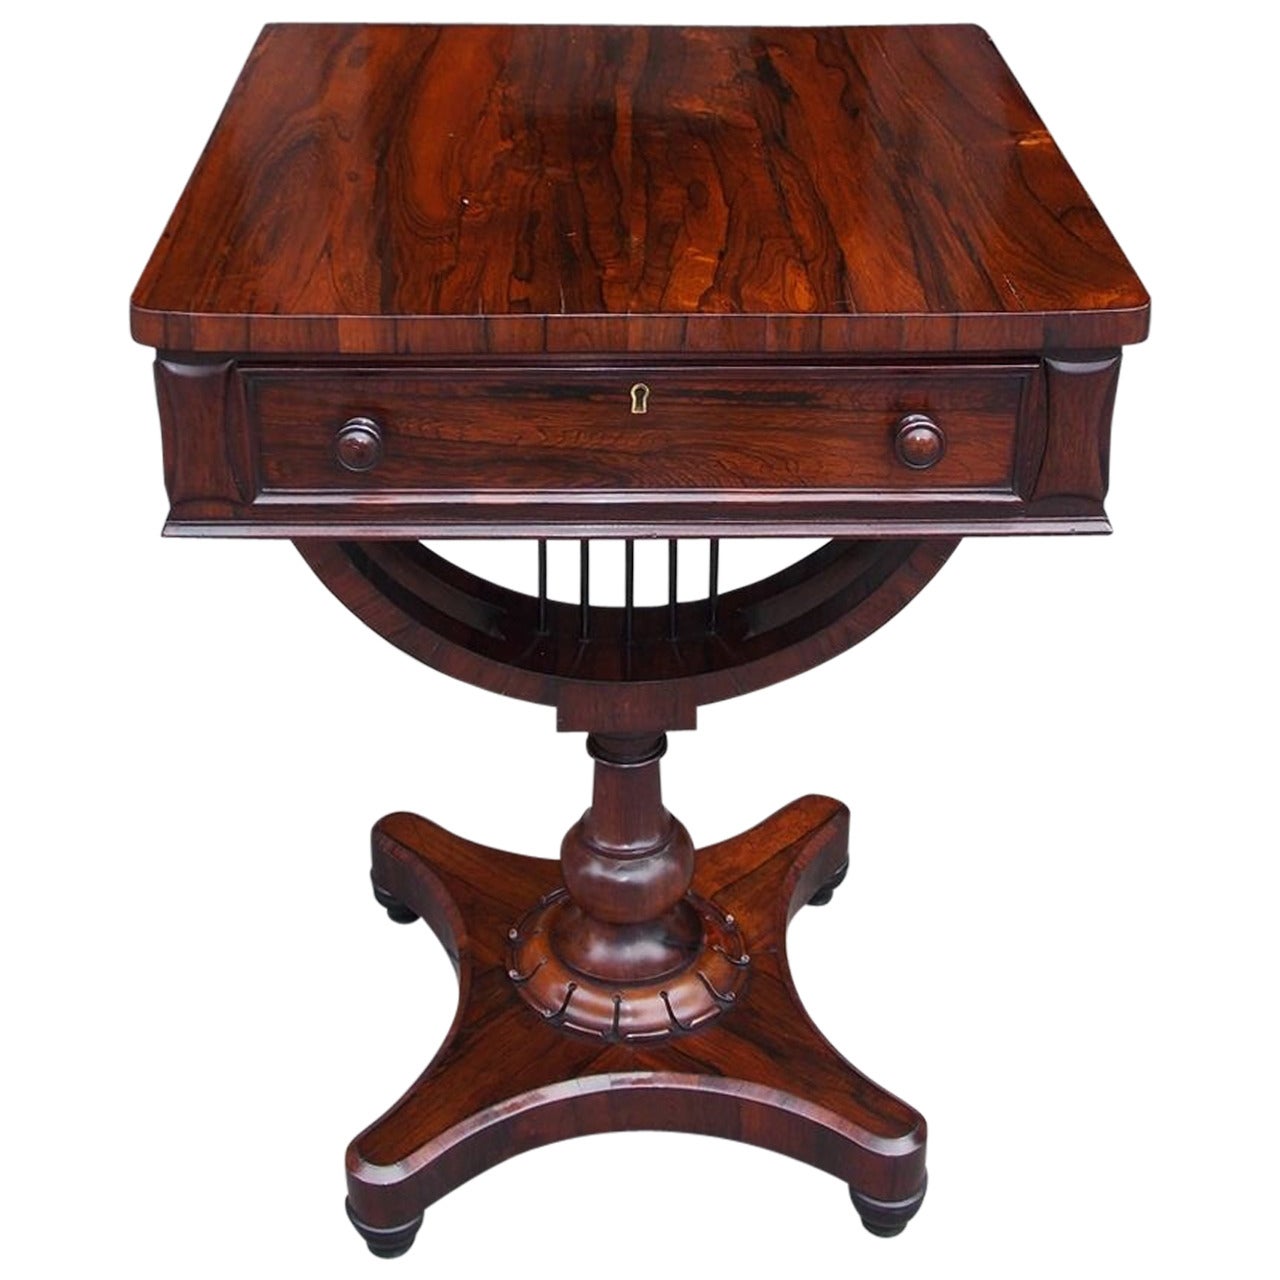 English Classical Zebra Wood Pedestal Table with Interior Desk. Circa 1830